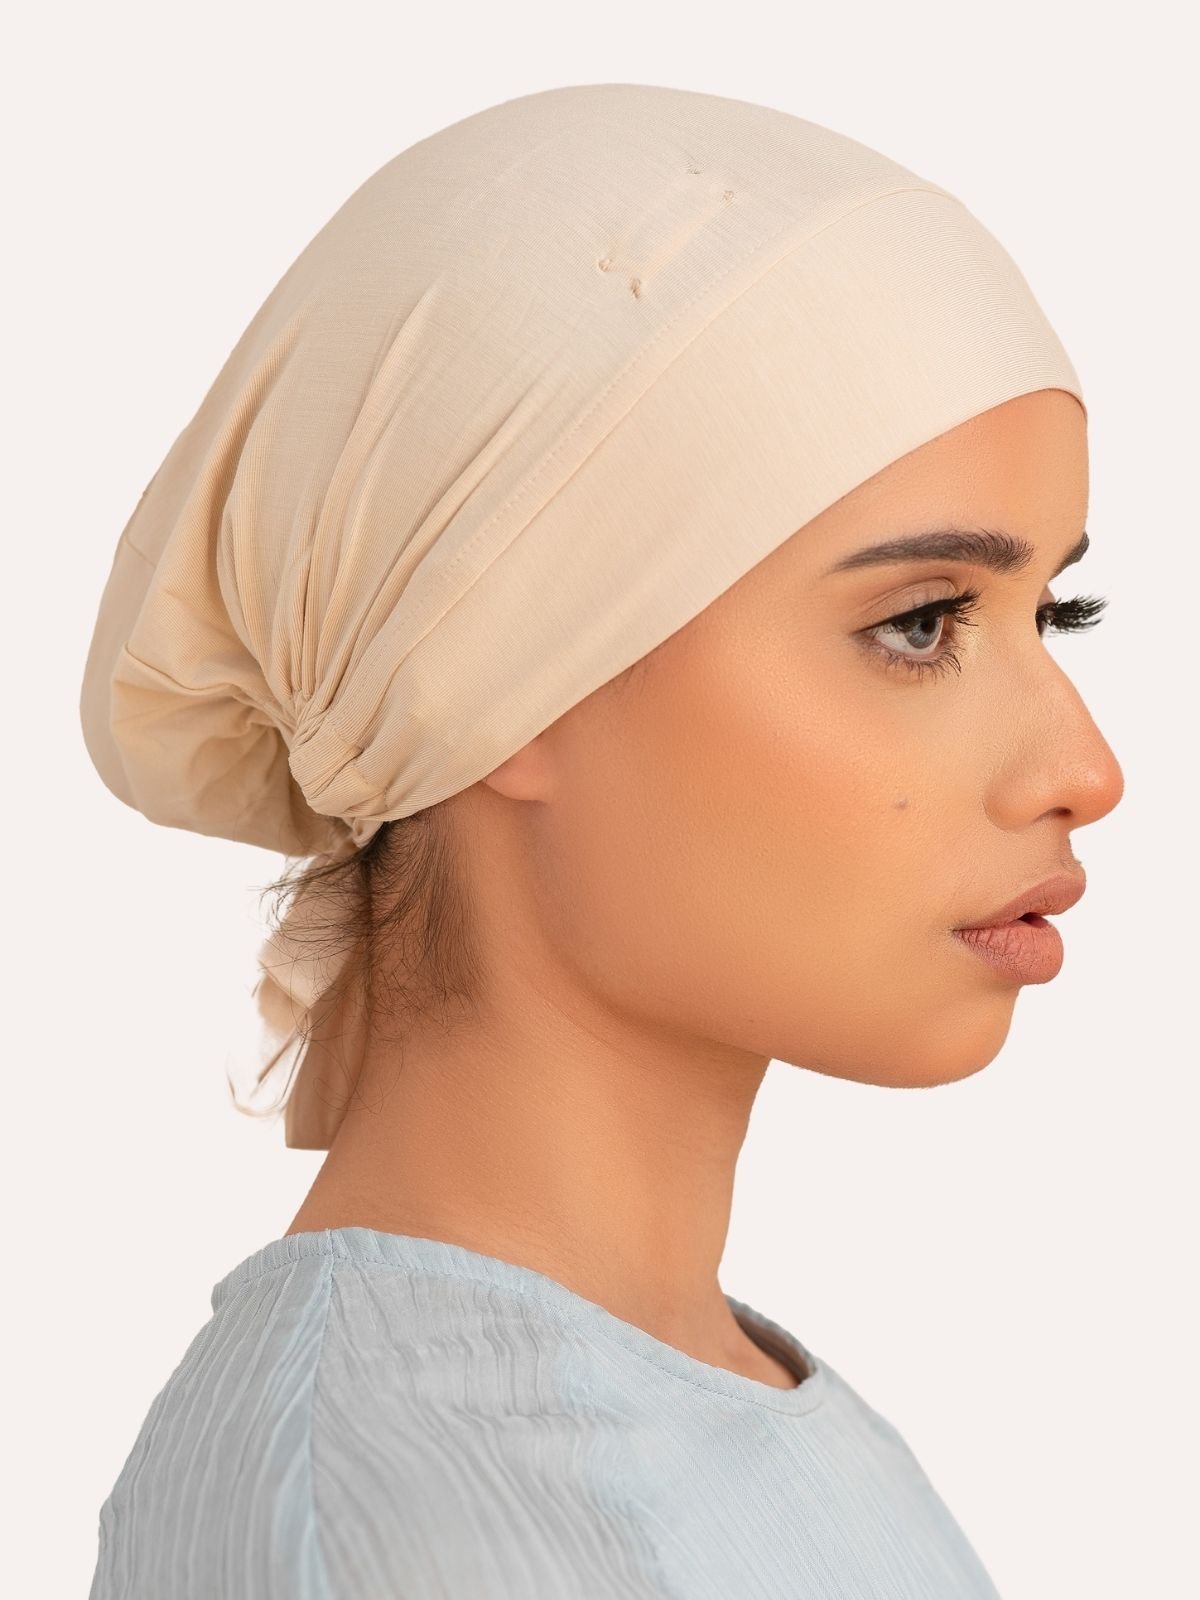 Criss Cross Full Tube Cotton Undercap Bonnet Headwrap/ Boho/ Boho Chic/  Alopecia Cap/ Chemo Cap/ Chemo/hijab Under Cap Bonnet Made in Turkey 